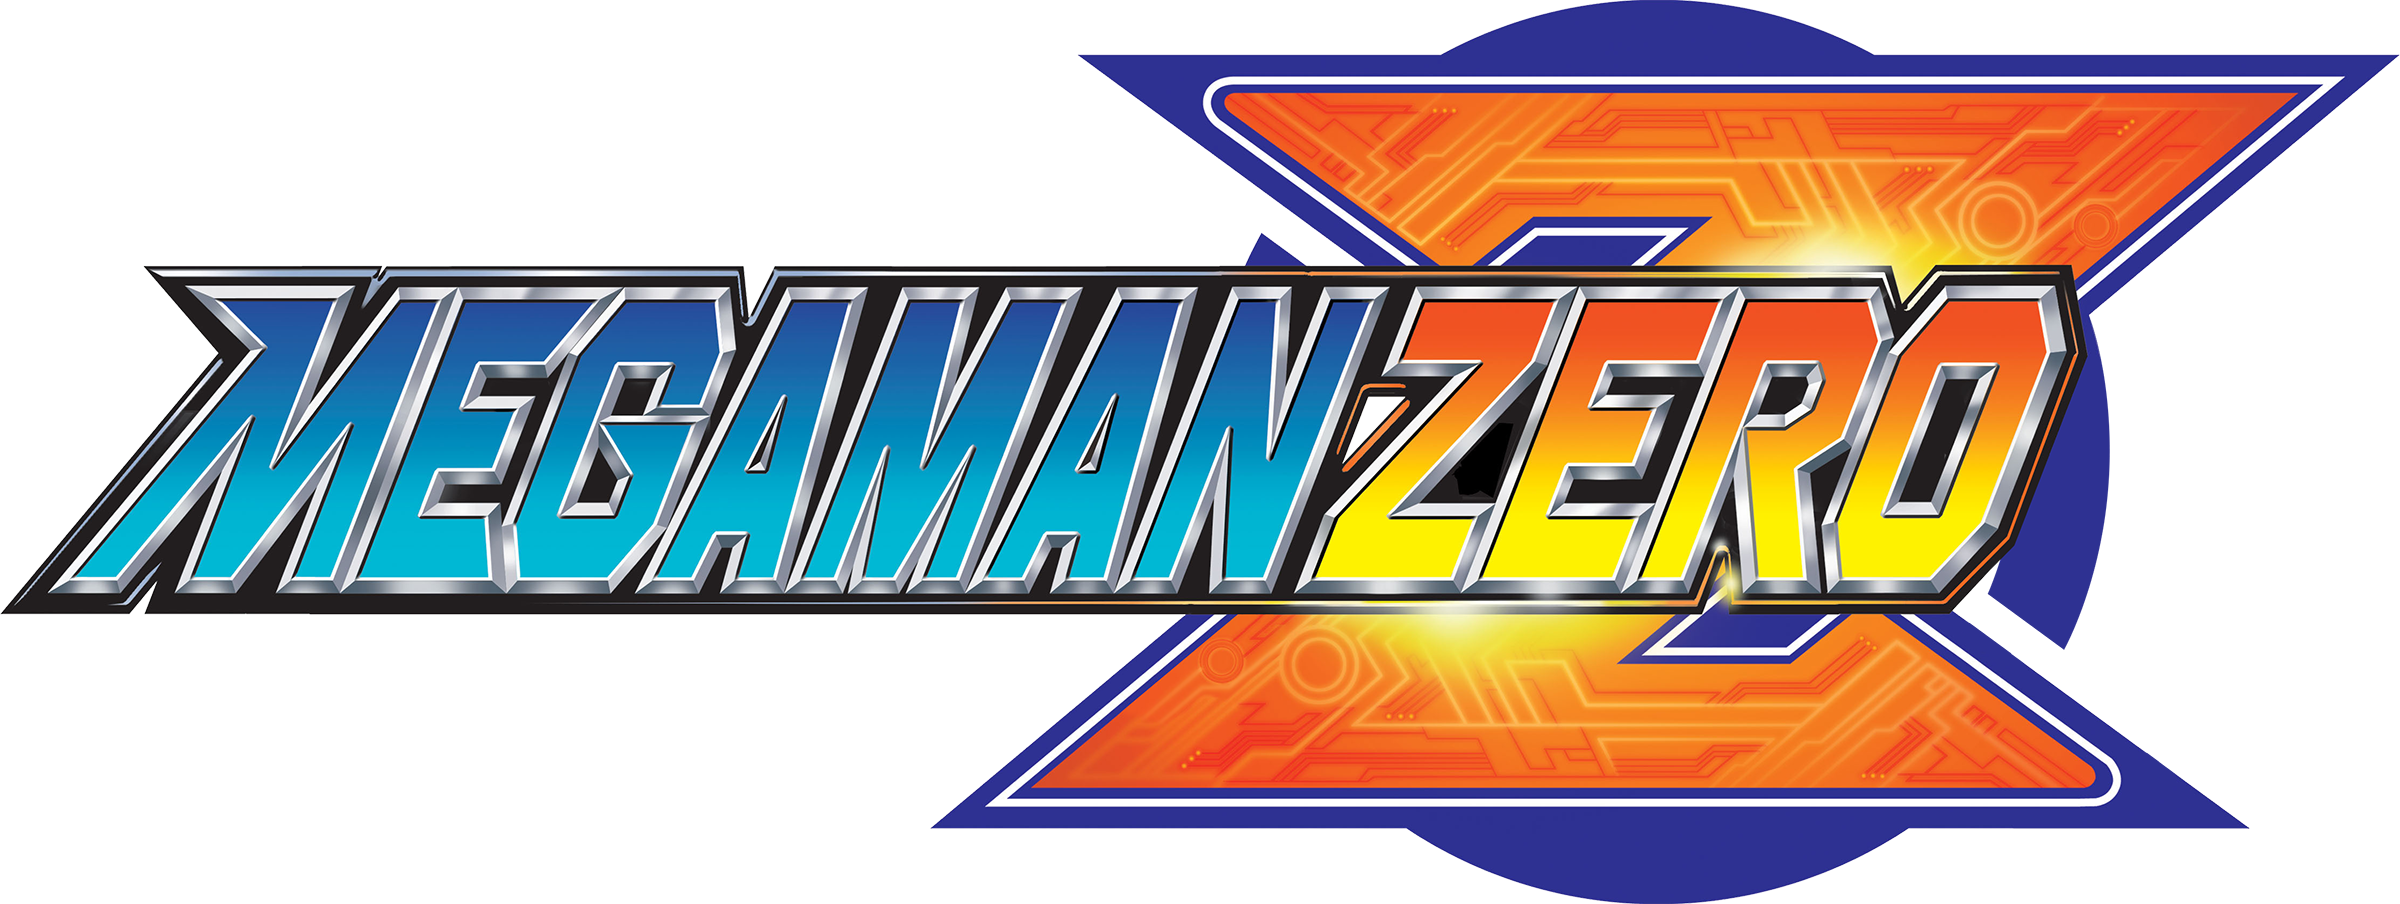 Mega Man Zero Details - LaunchBox Games Database